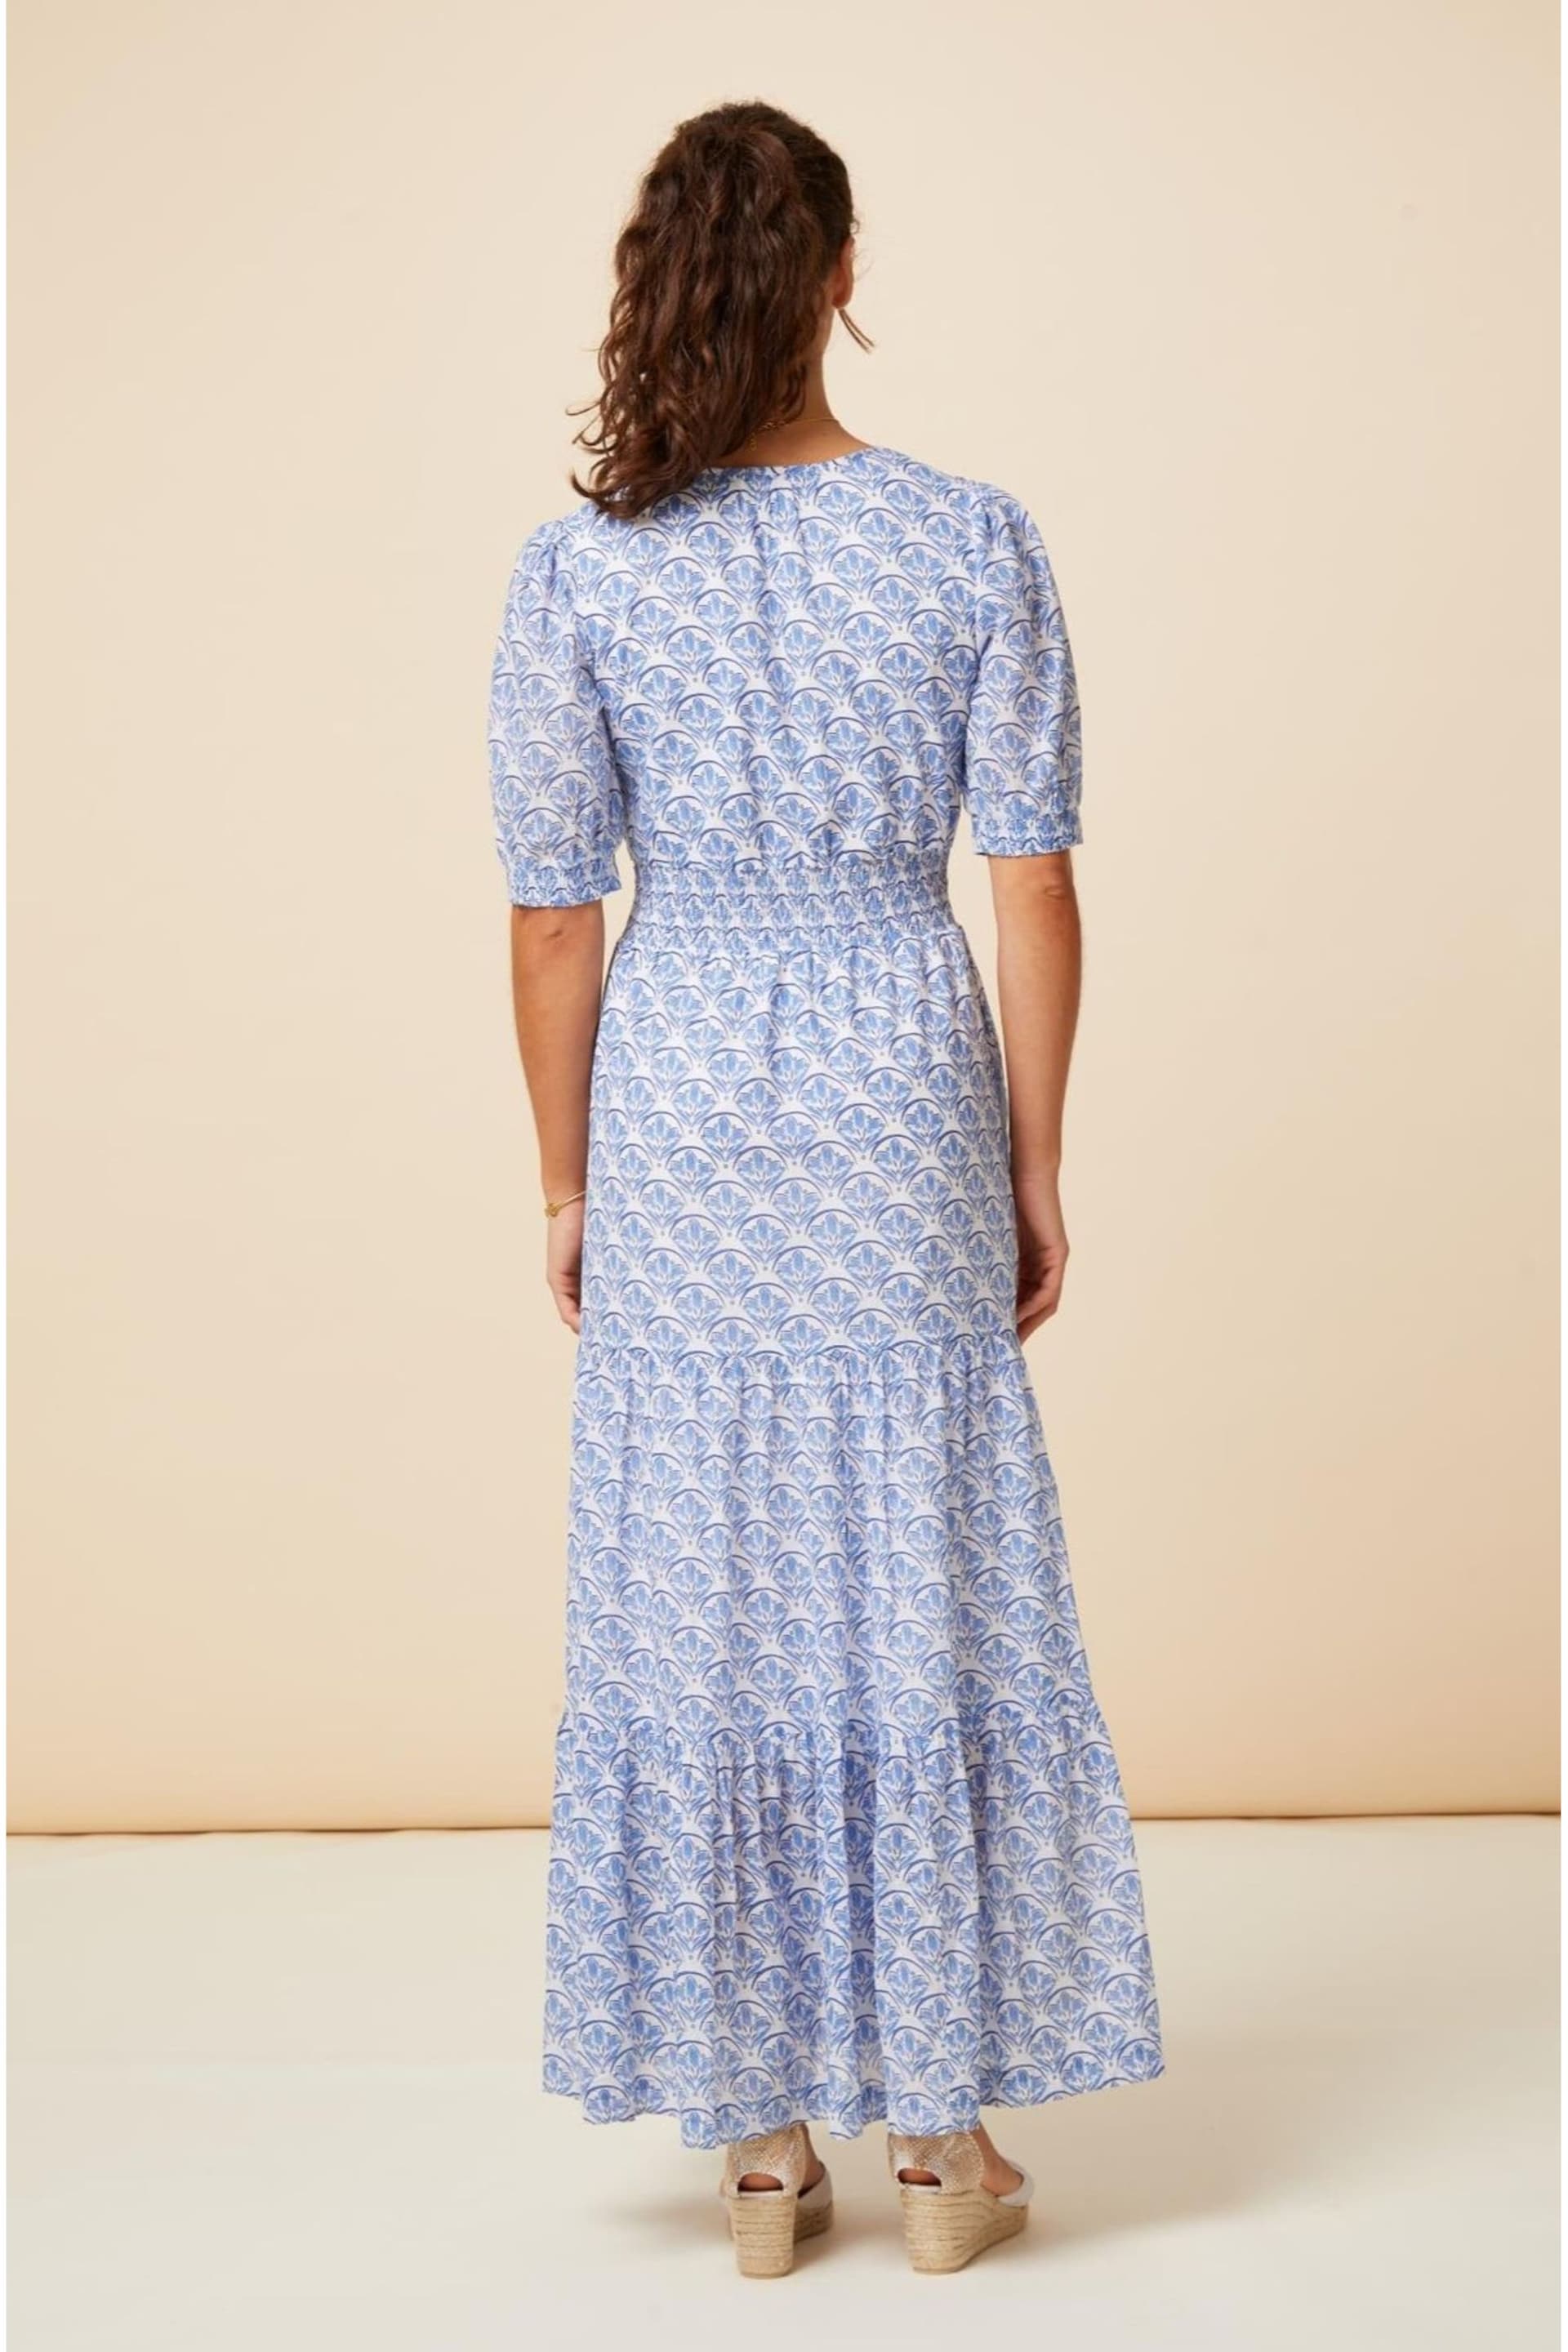 Aspiga Blue Billie Short Sleeve Dress - Image 2 of 6